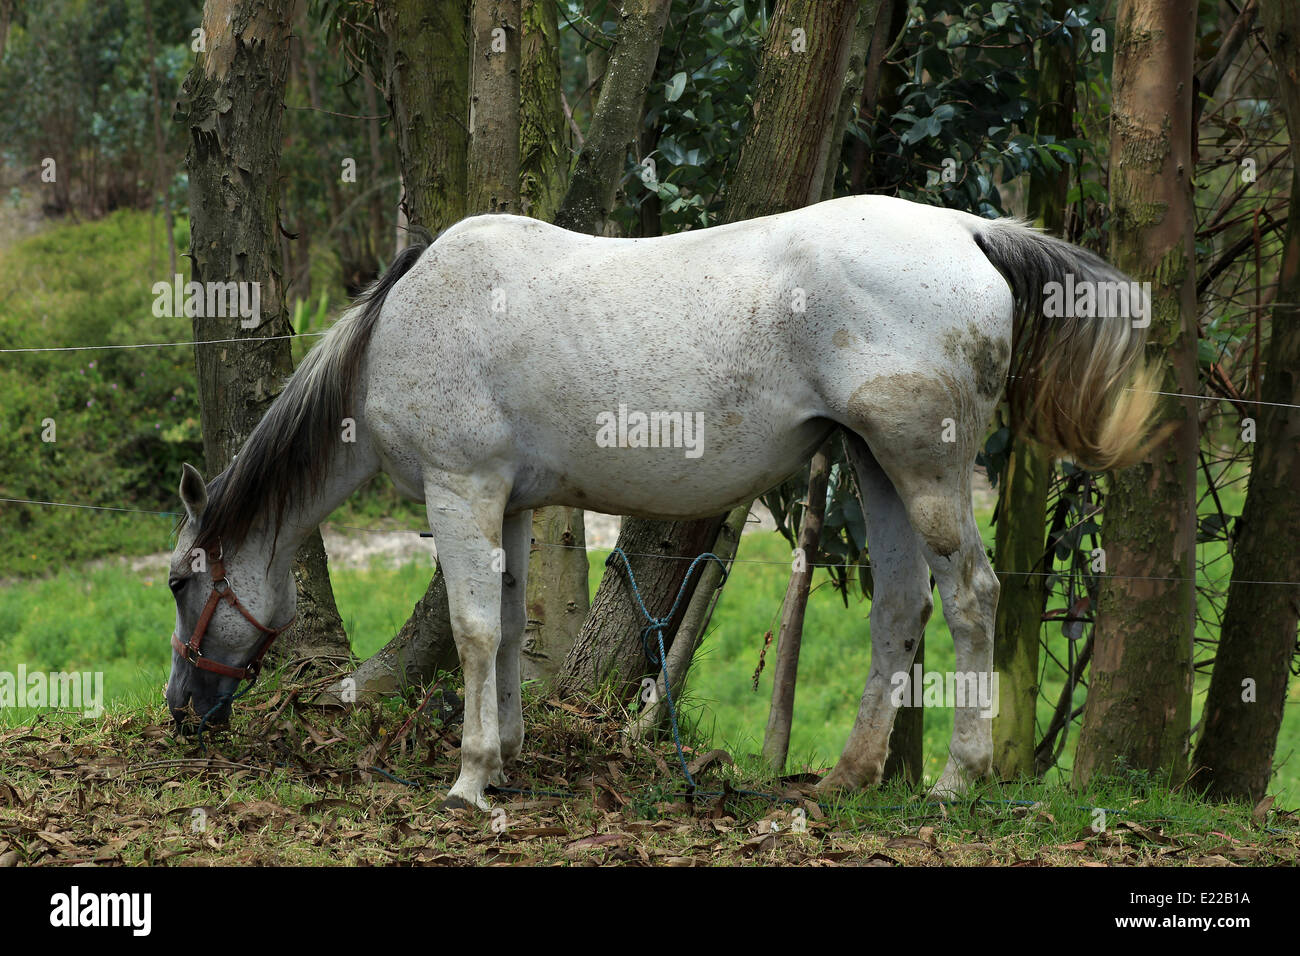 A horse grazing in a farmers pasture in Cotacachi, Ecuador Stock Photo